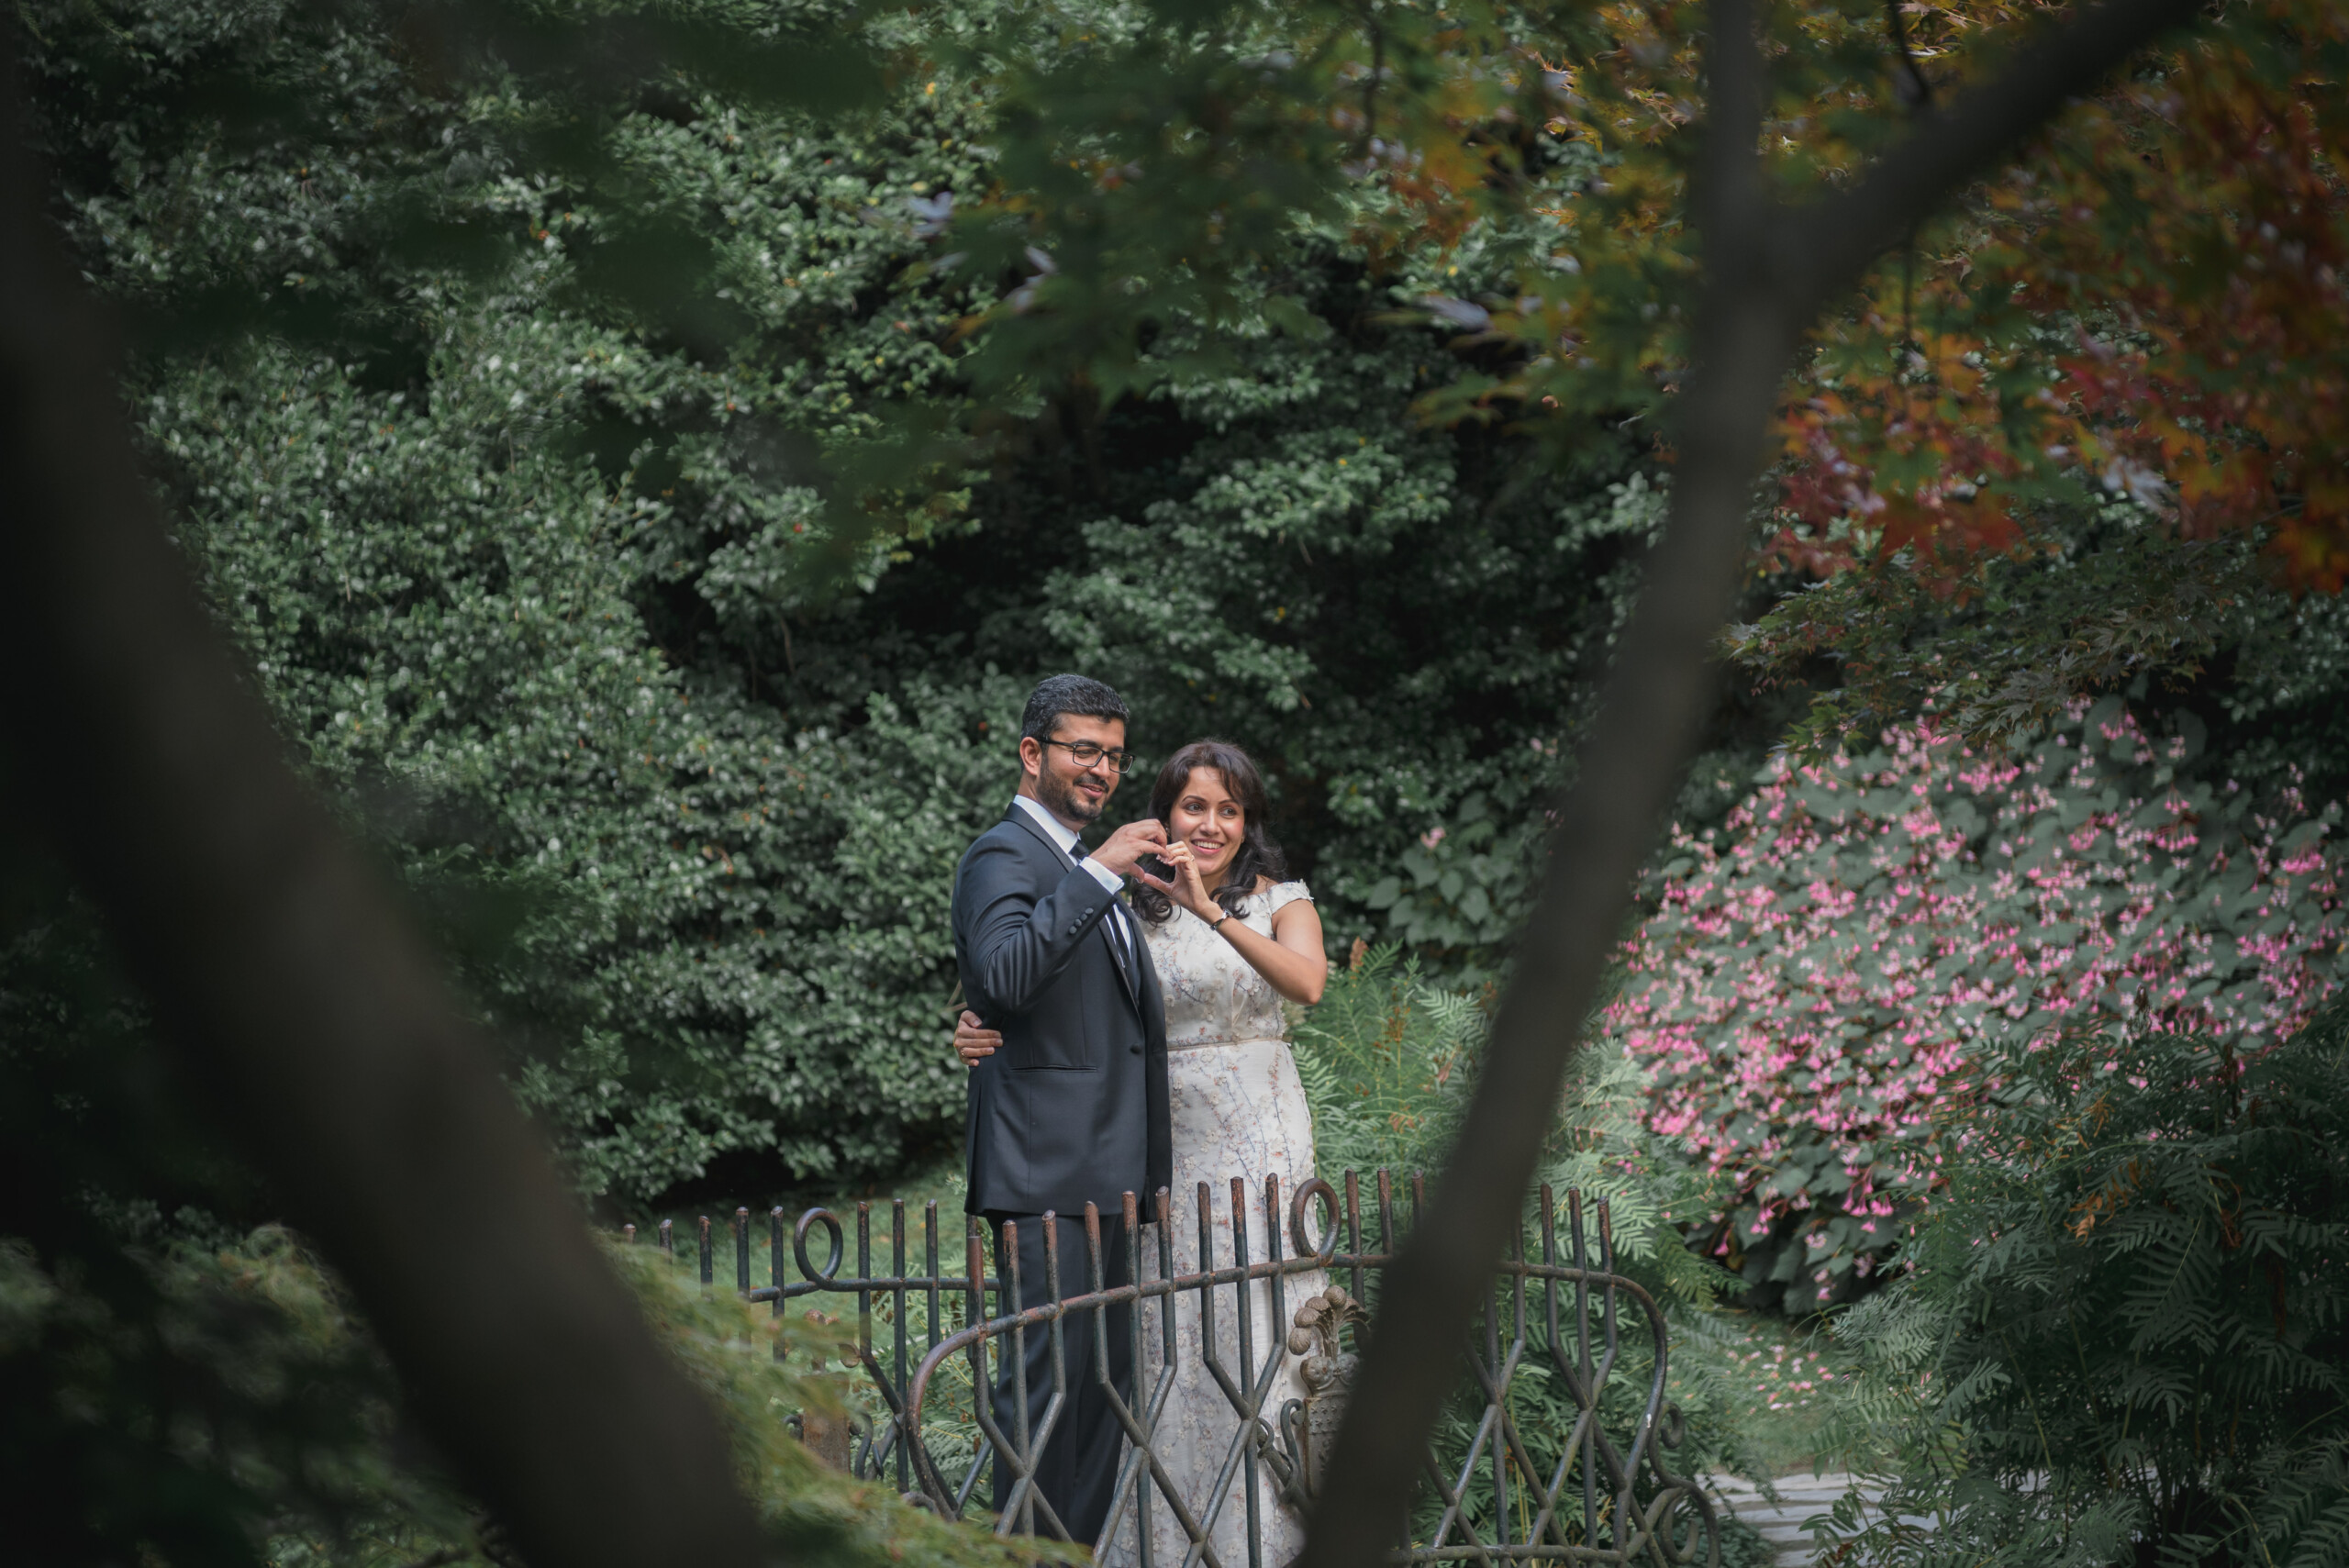 Wedding photoshoot by Riccardo, Localgrapher at Lake Como